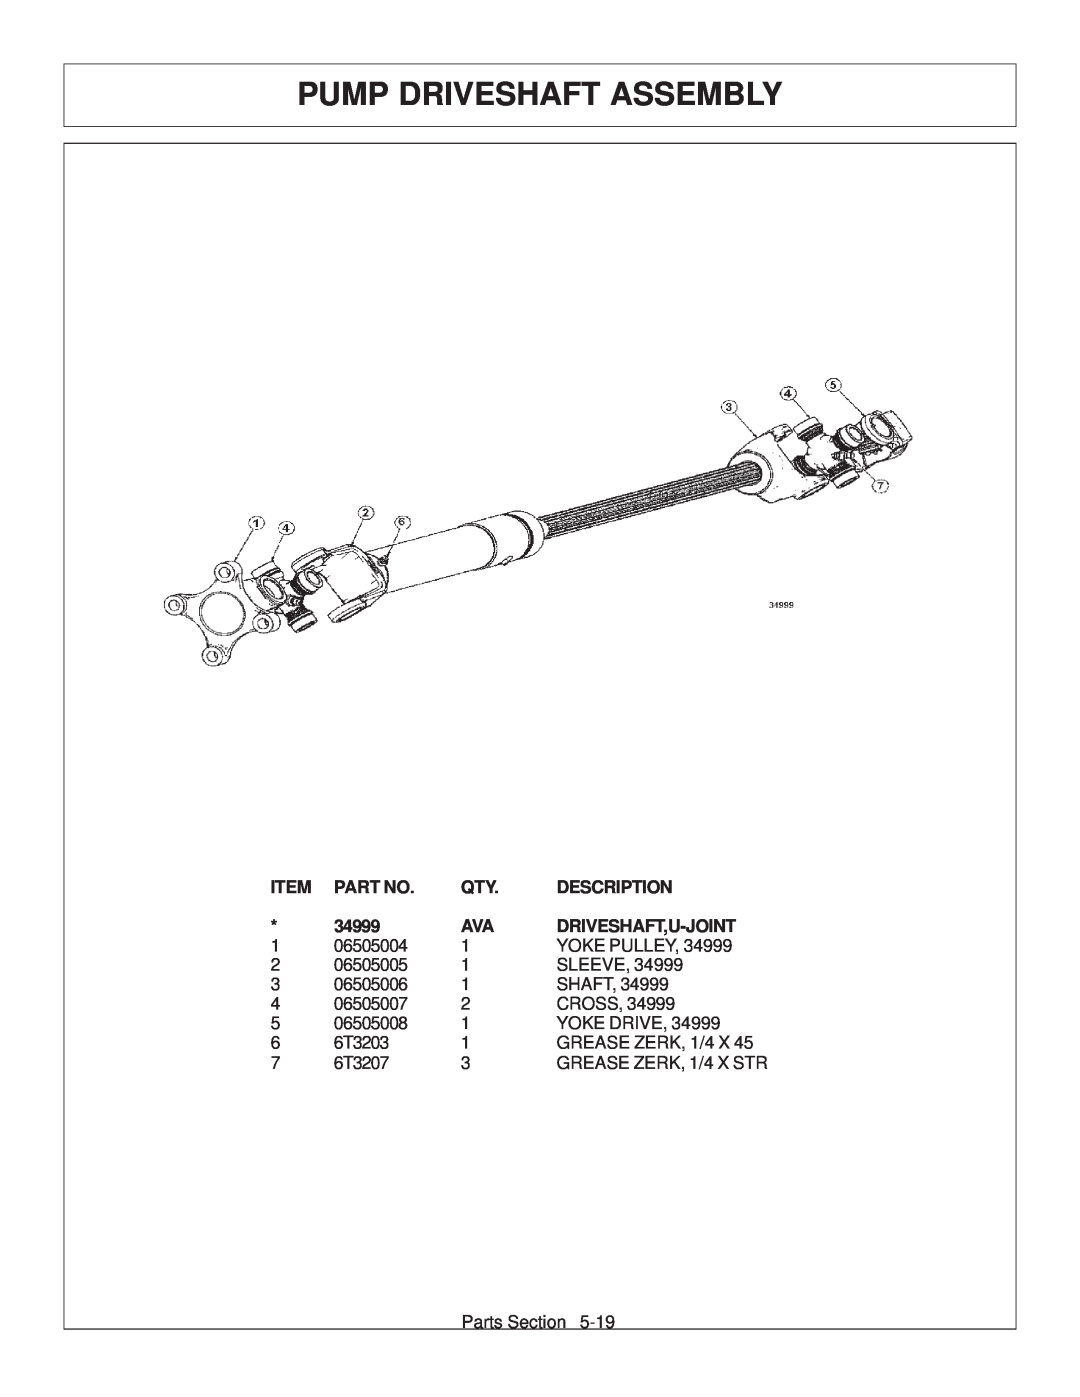 Tiger Products Co., Ltd JD 72-7520 manual Pump Driveshaft Assembly, Description, 34999, Driveshaft,U-Joint 